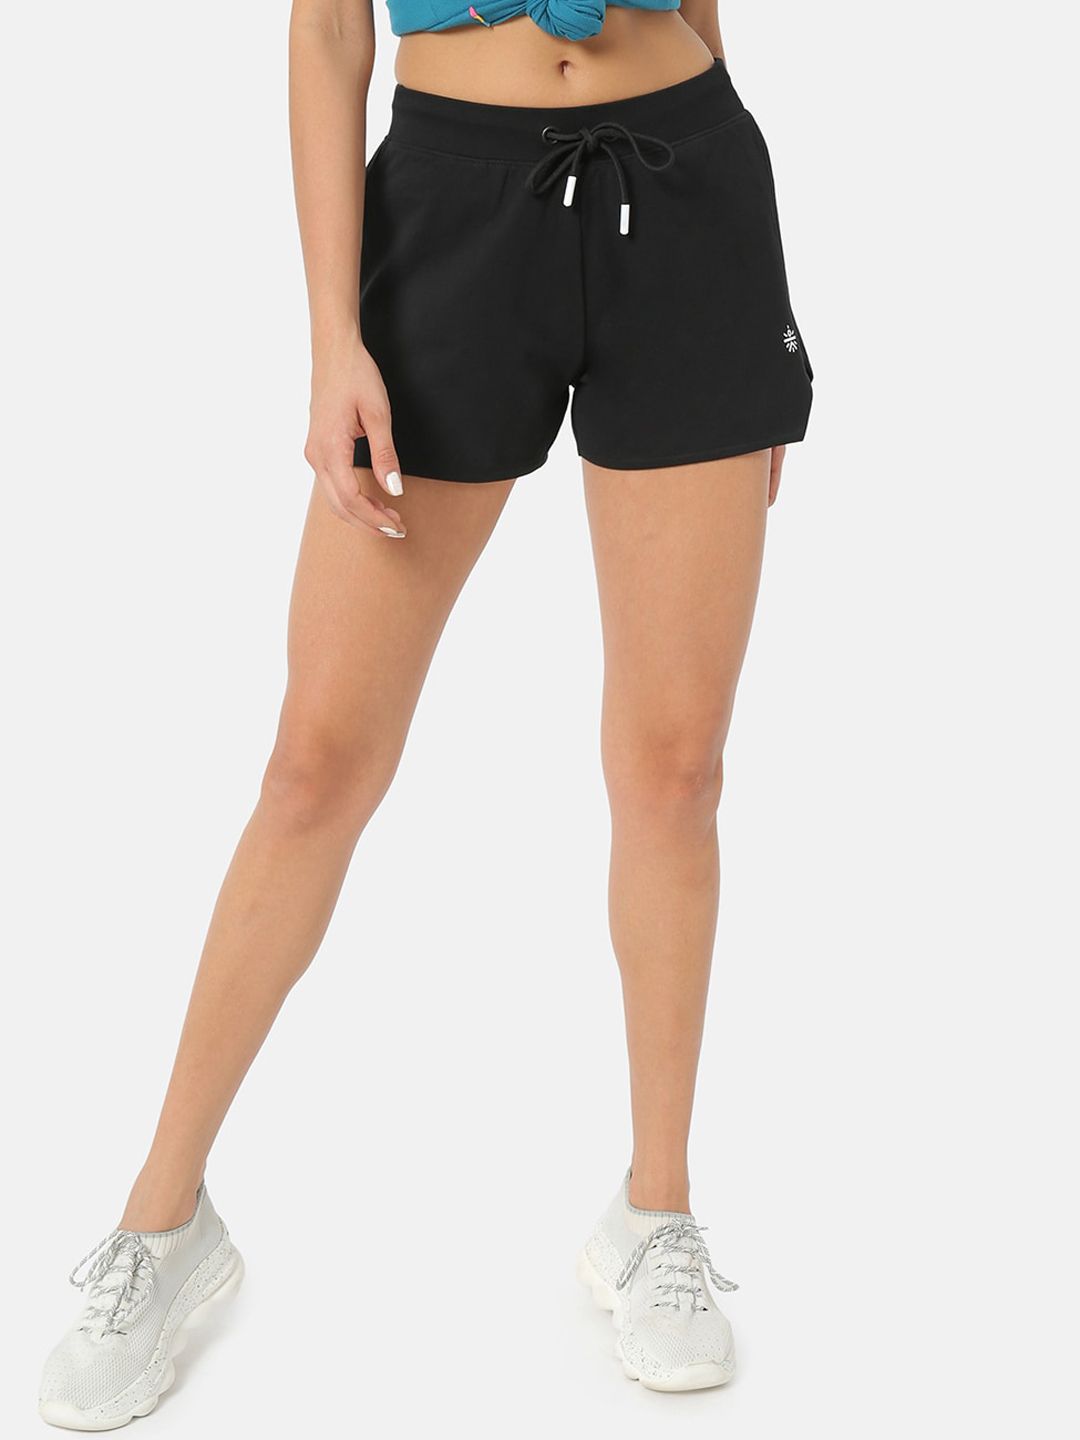 Cultsport Women Black Solid Regular Fit Regular Shorts Price in India